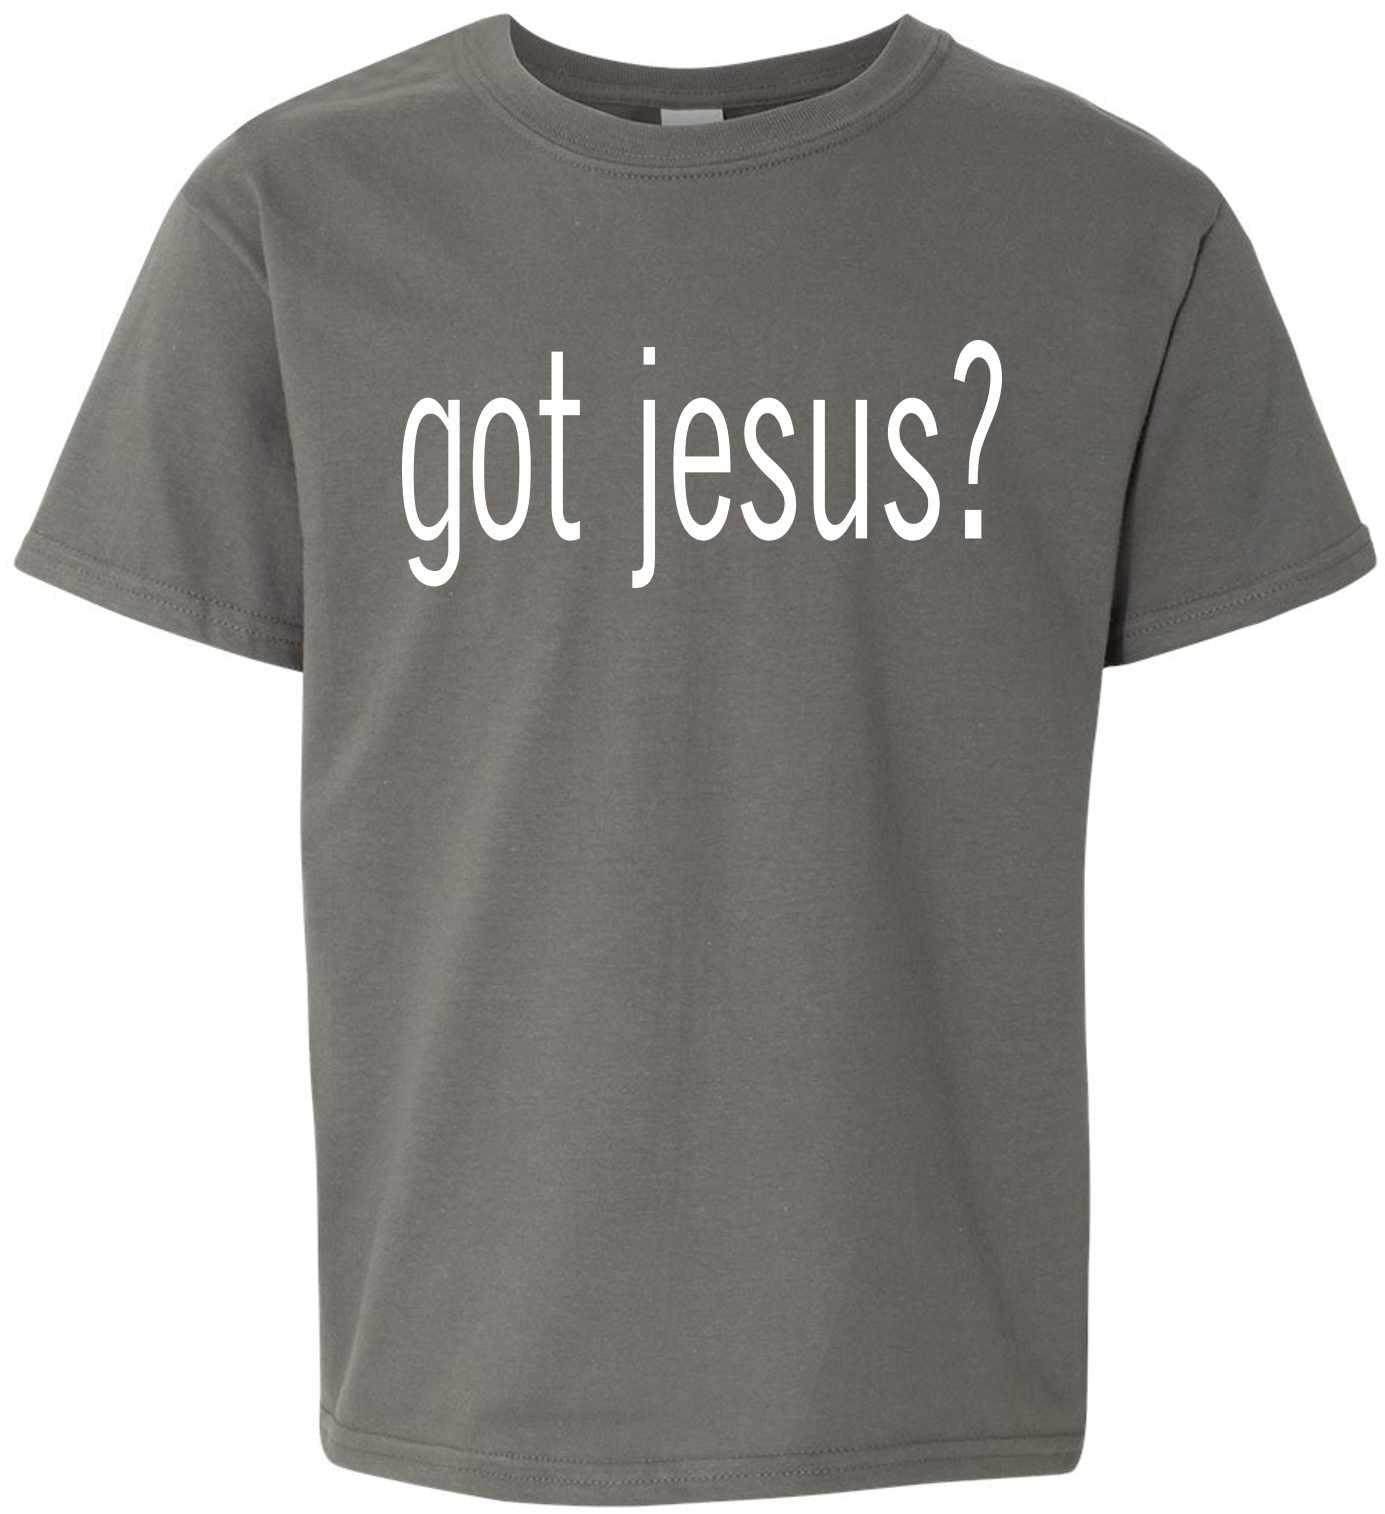 Got Jesus on Kids T-Shirt